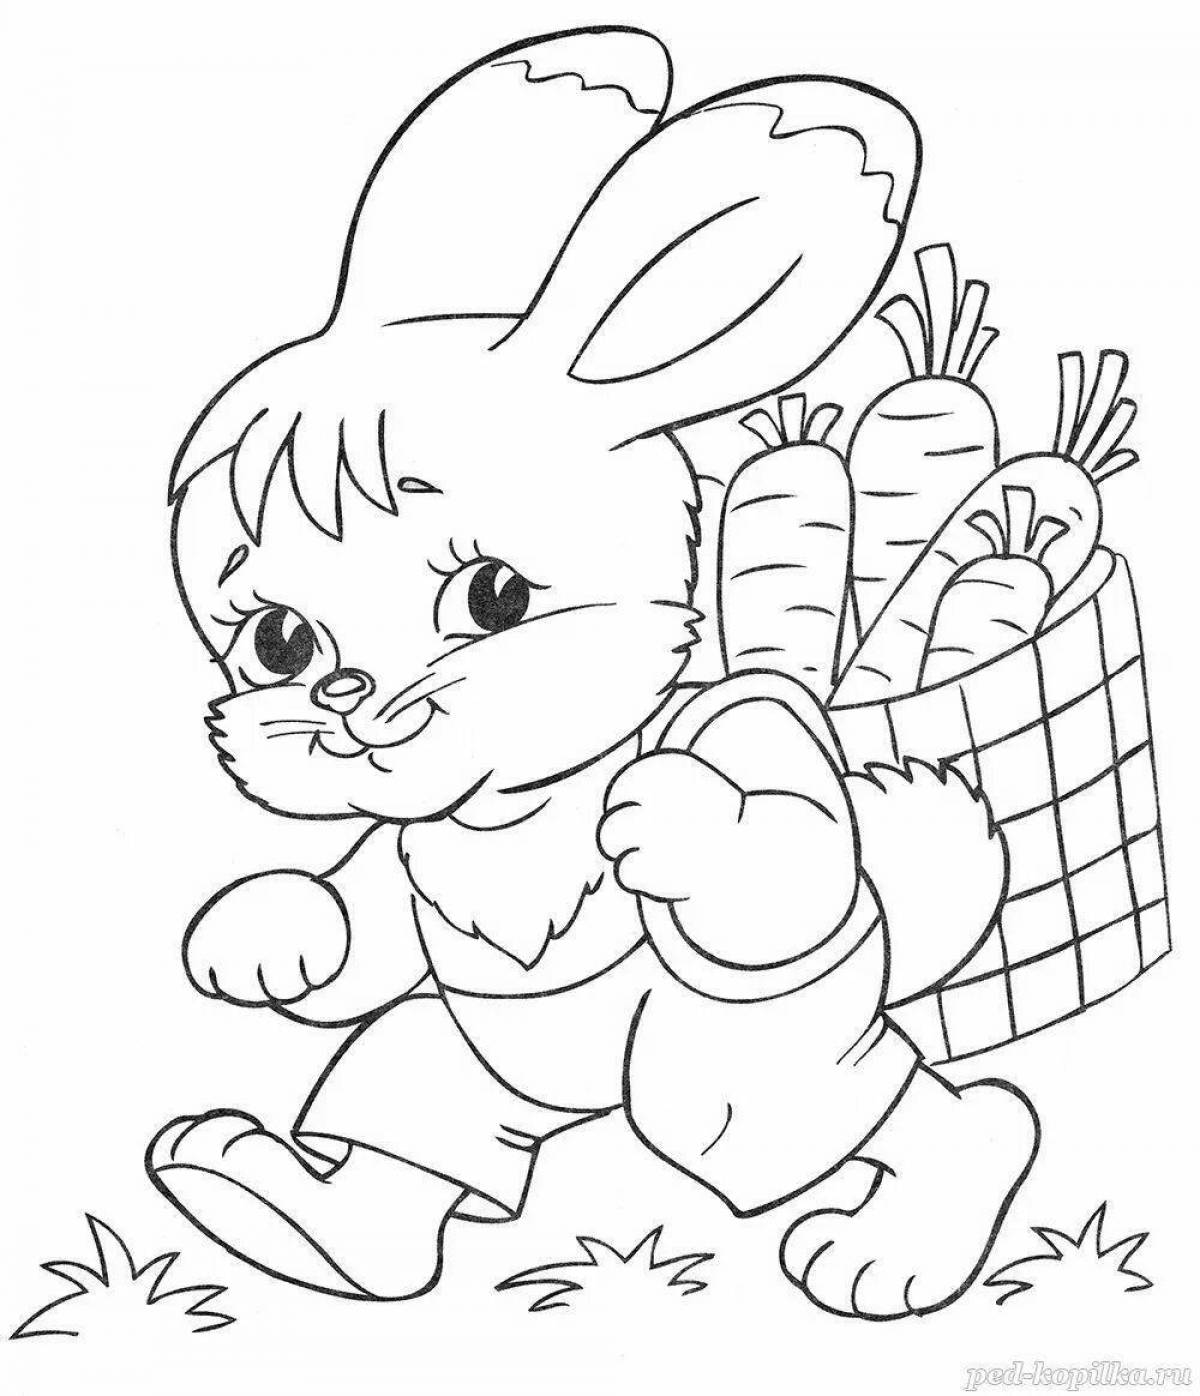 Carrot bunny for kids #4